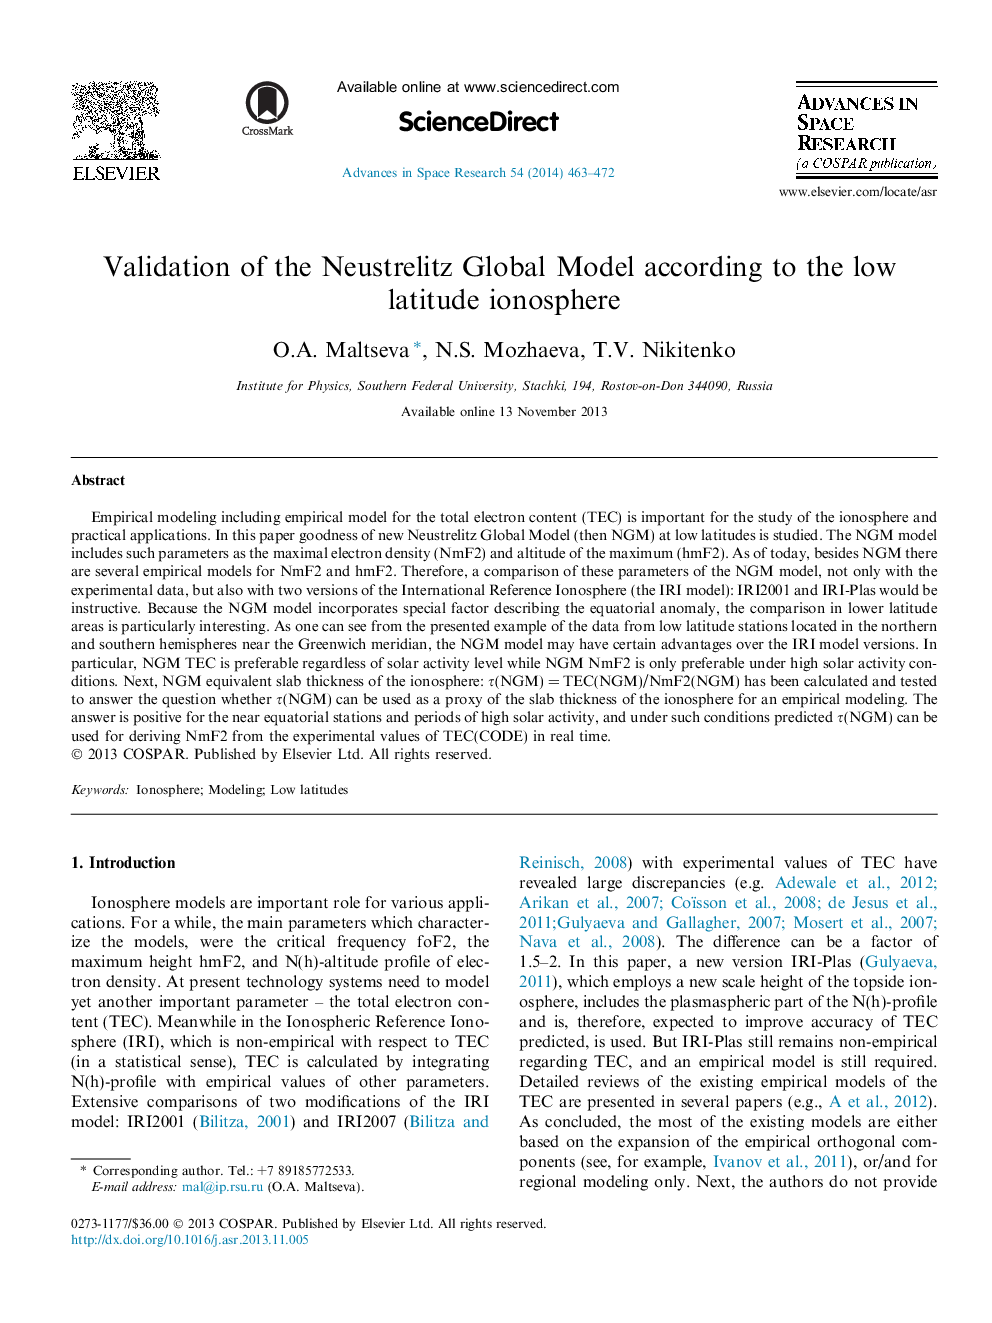 Validation of the Neustrelitz Global Model according to the low latitude ionosphere